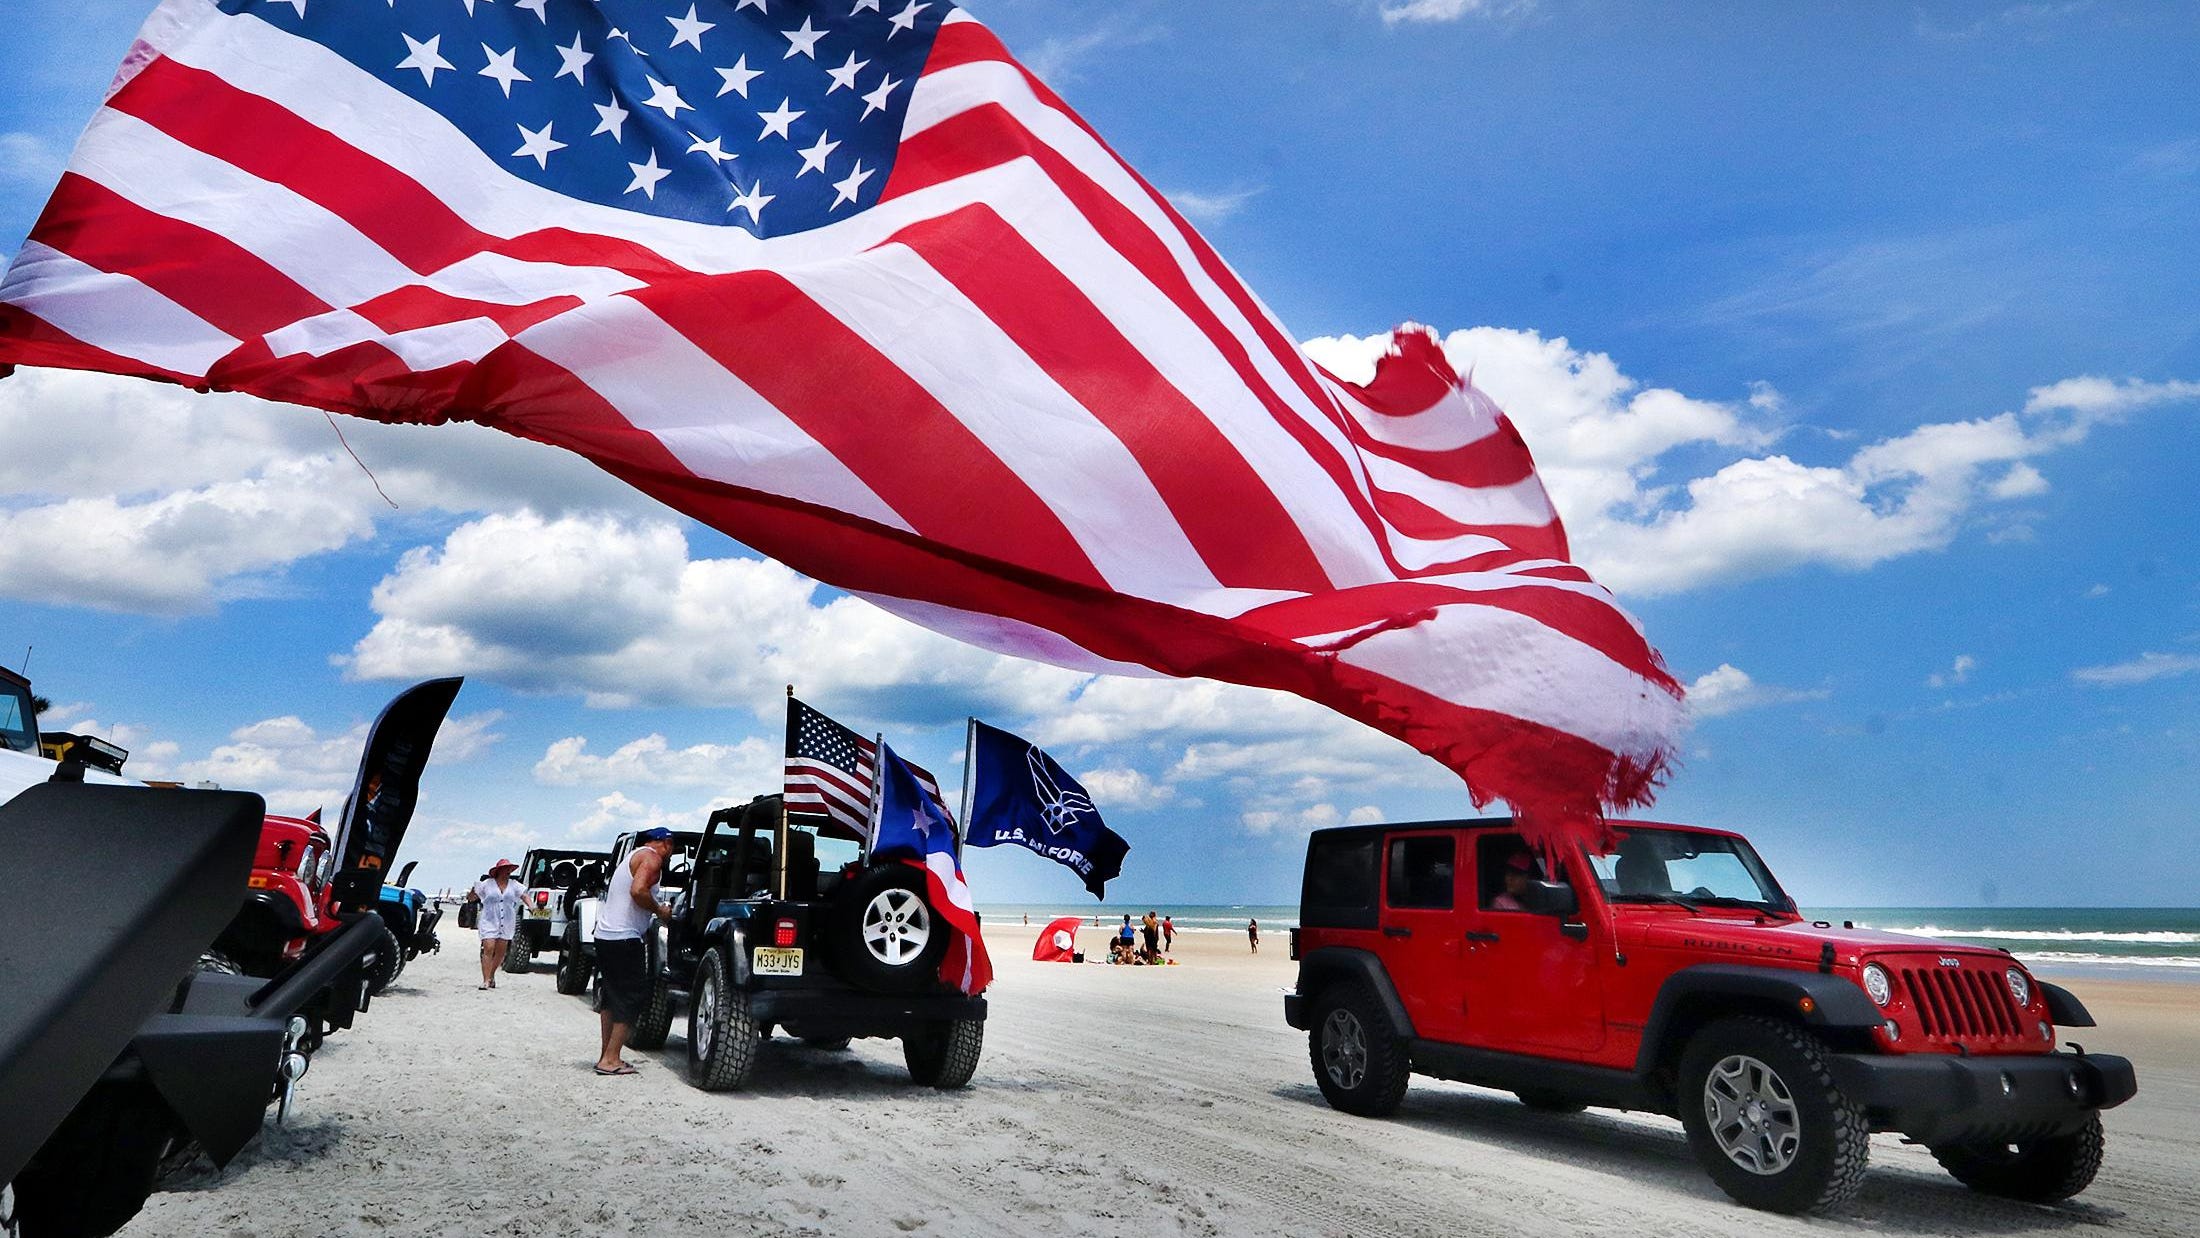 Jeep Beach returns to Daytona Beach with plenty of activities